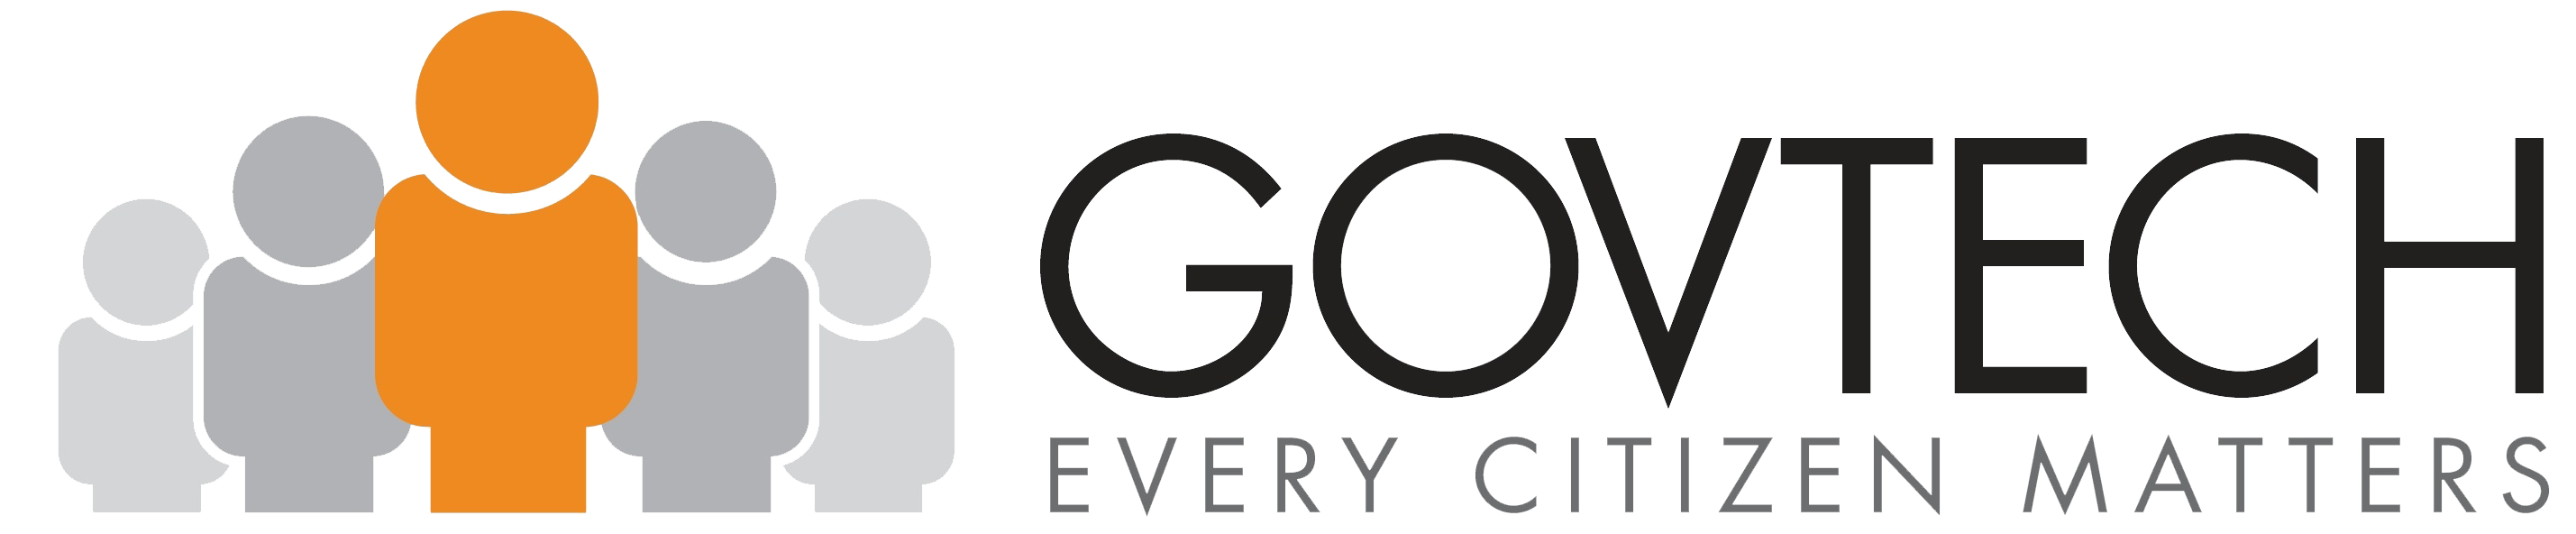 govtech logo